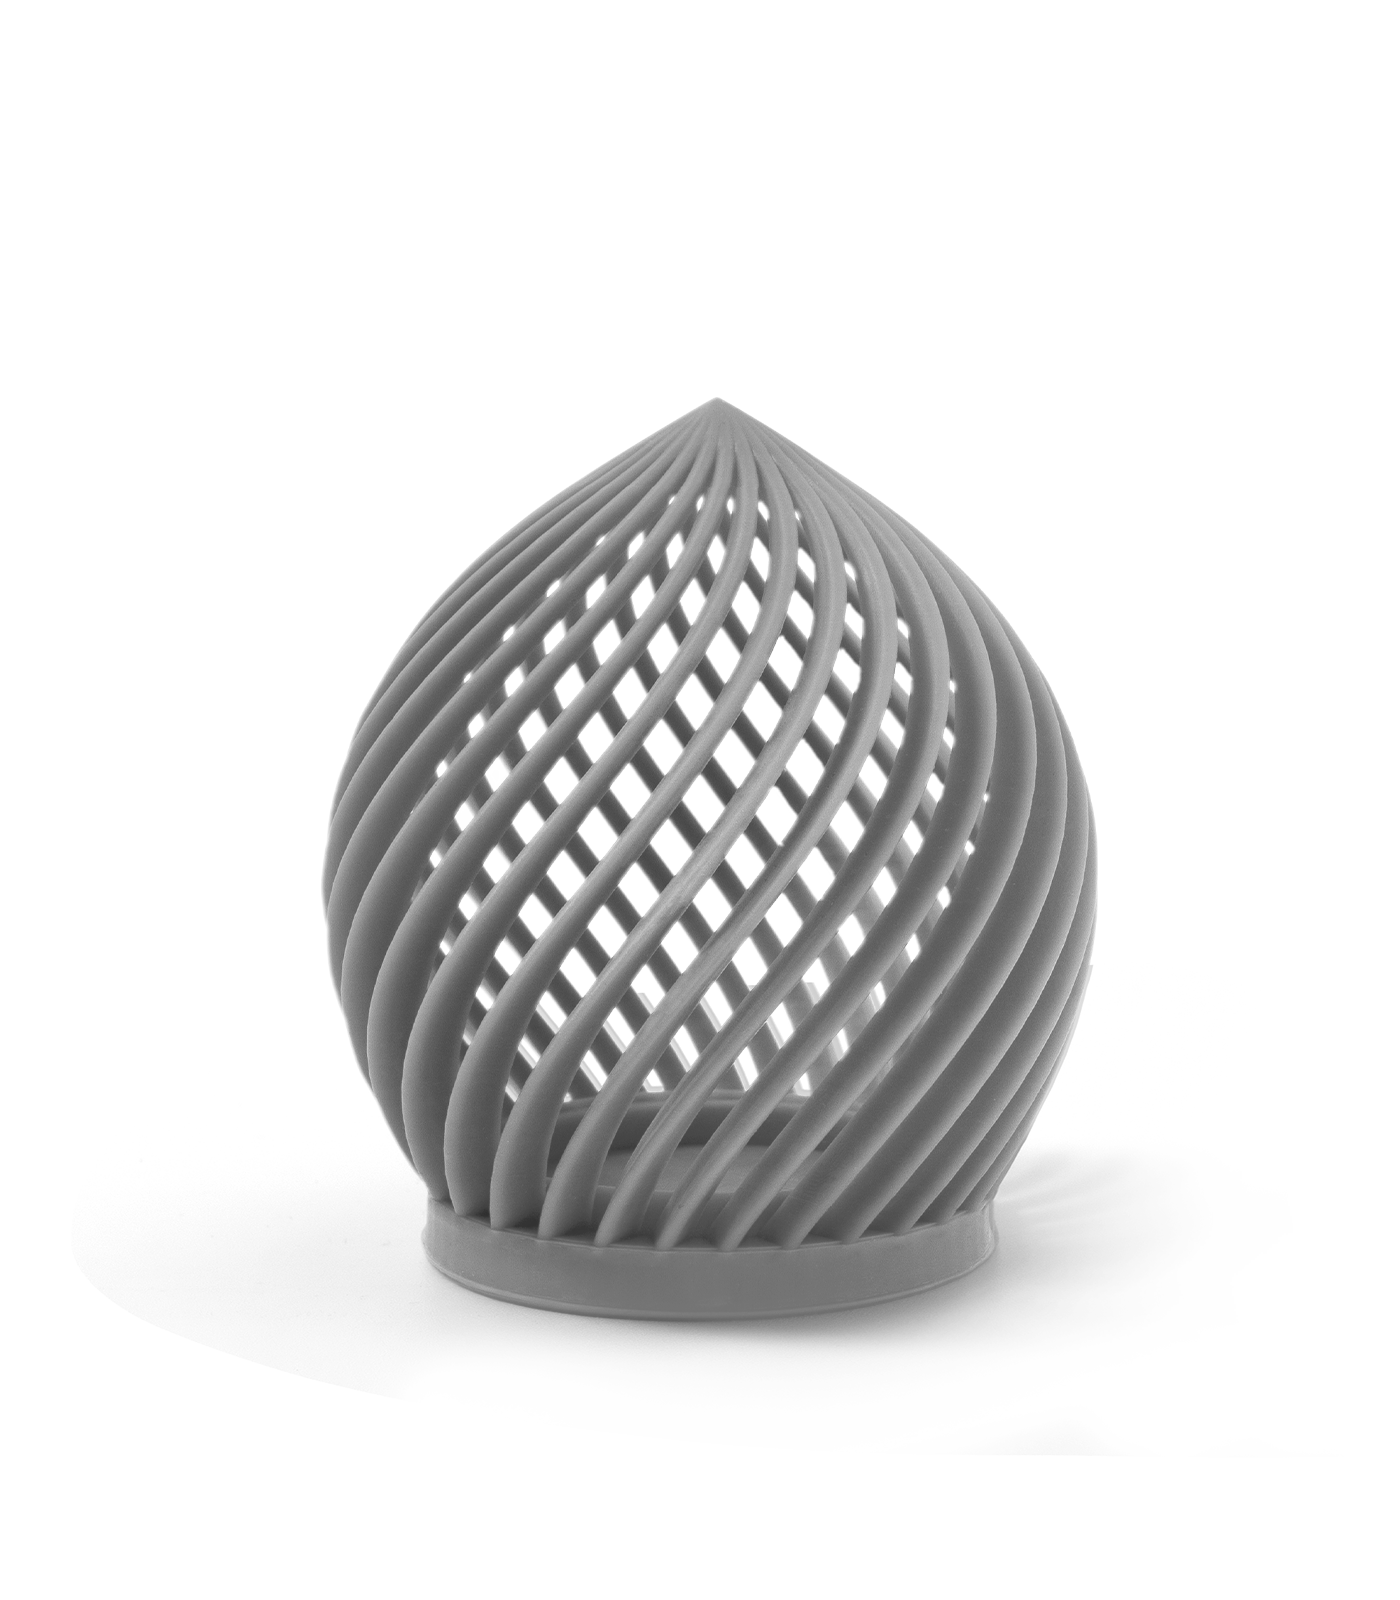 Phrozen ABS-like 3D Printing Resin